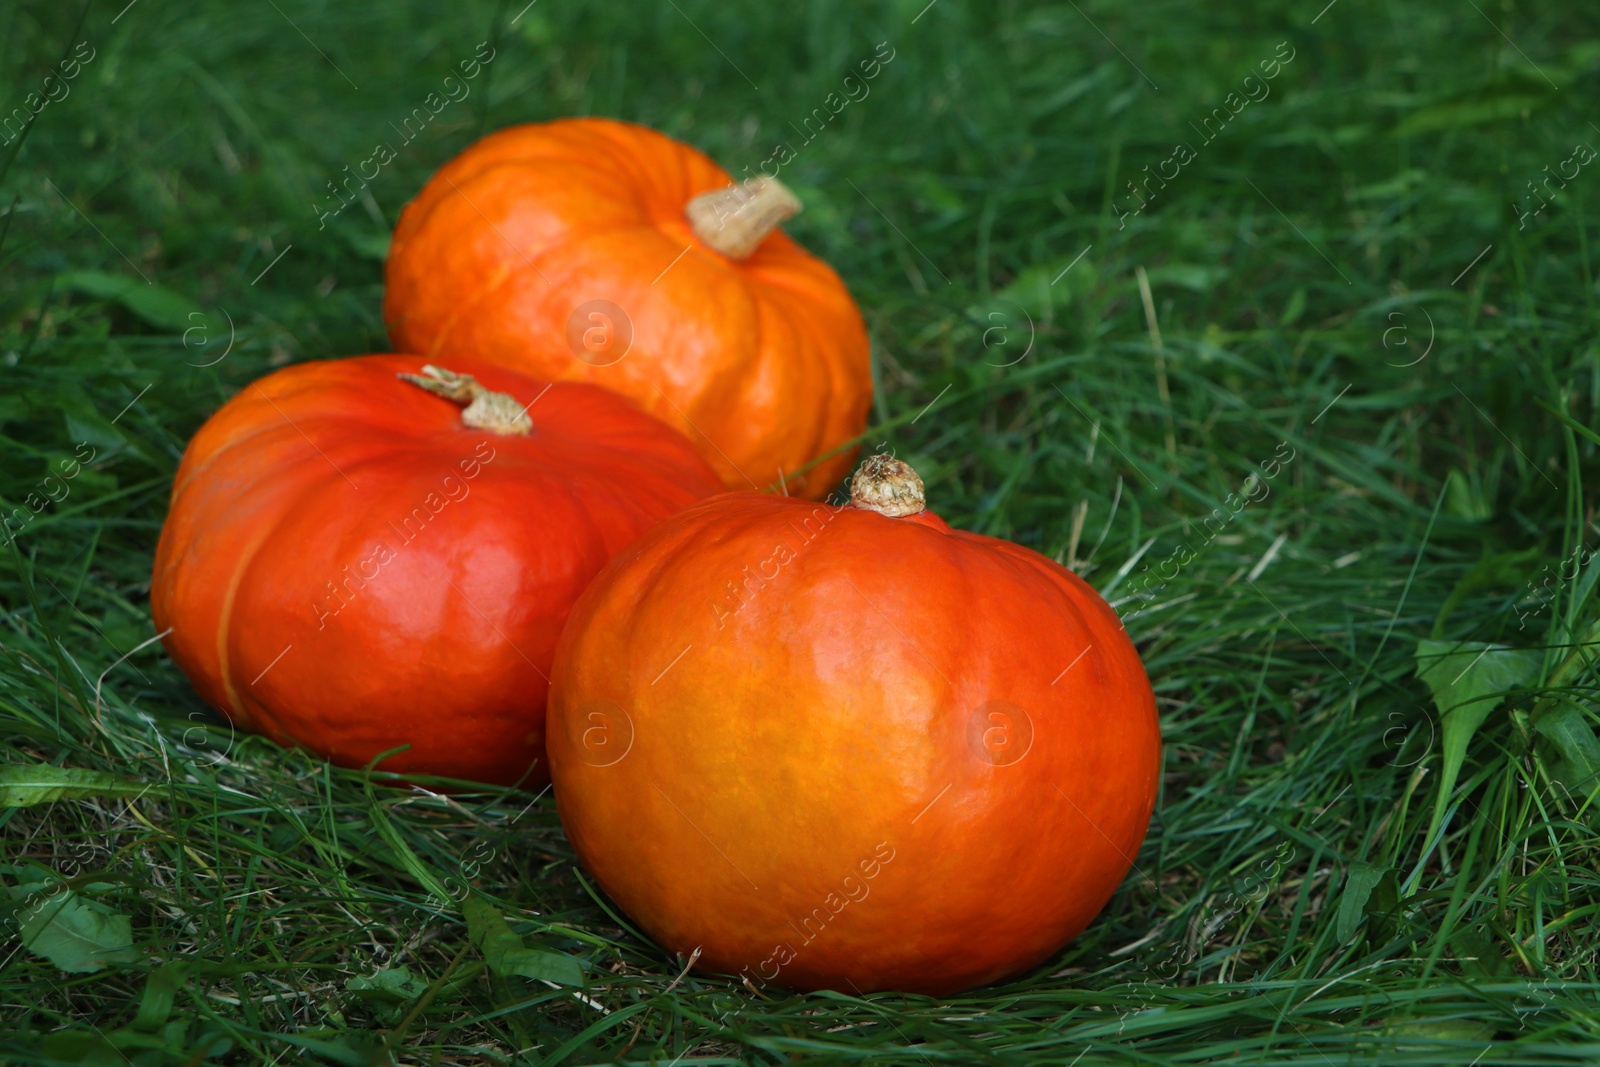 Photo of Many ripe orange pumpkins among green grass outdoors